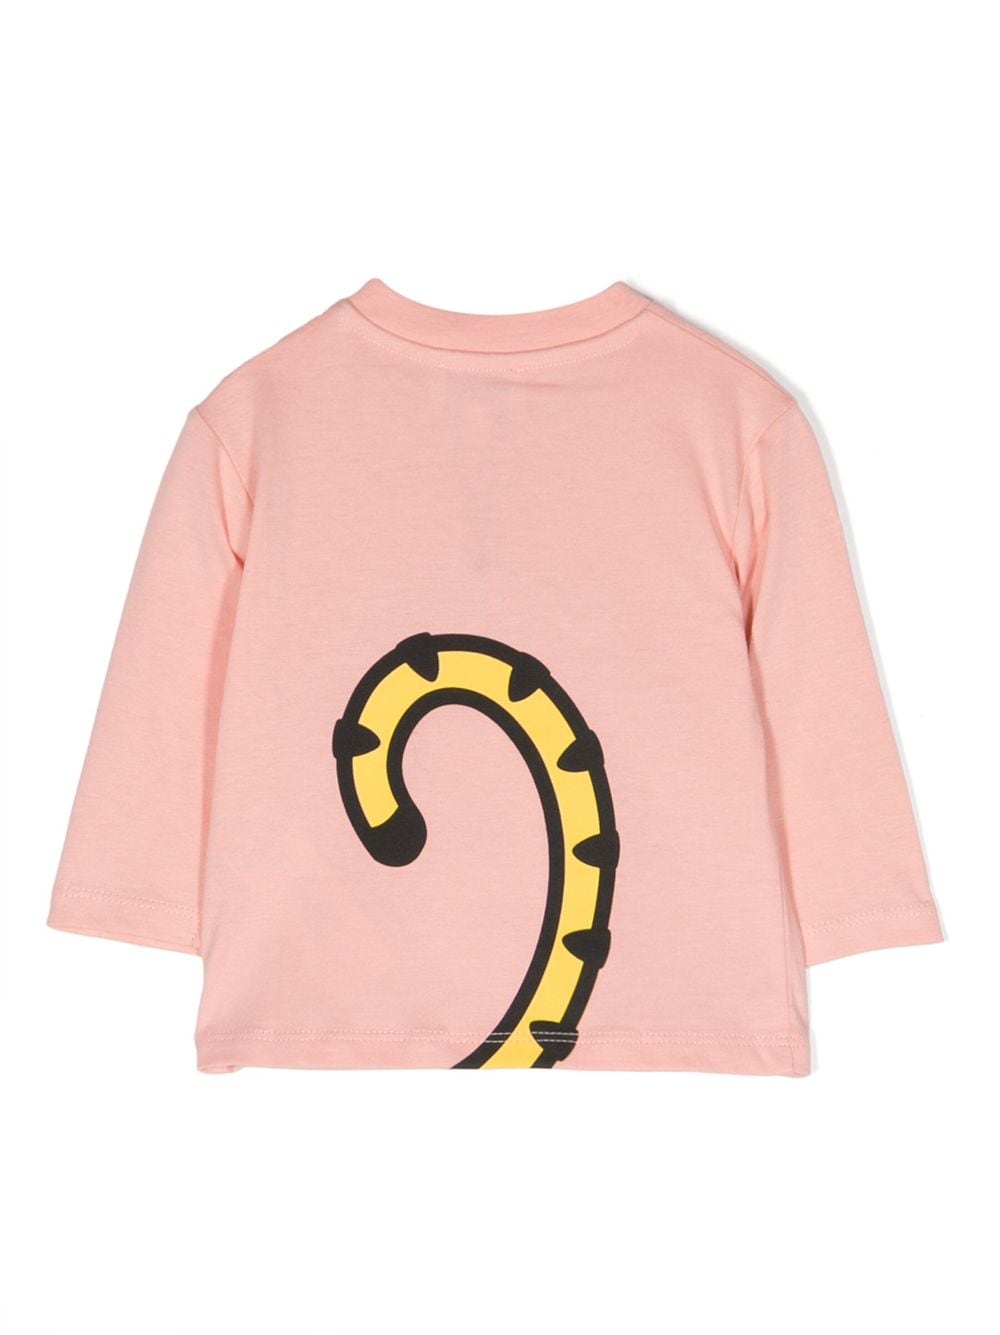 Pink cotton jersey baby girl KENZO t-shirt